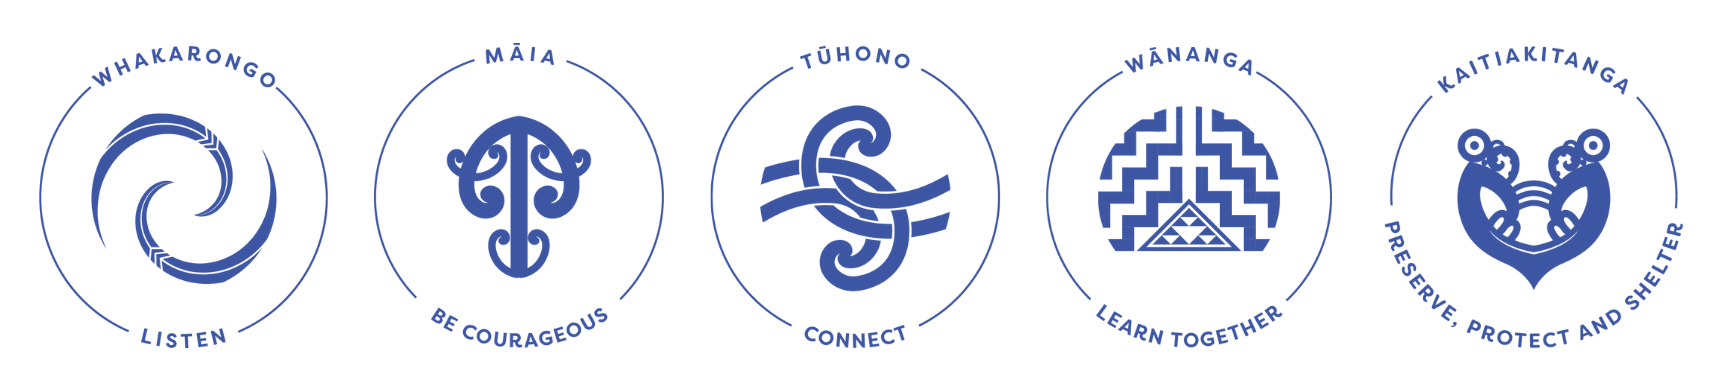 5 roundels displaying our values, whakarongo (listen), Tūhono (connect), Wānanga (learn together), Māia (be courageous), Kaitakitanga (preserve, protect, and shelter).. 